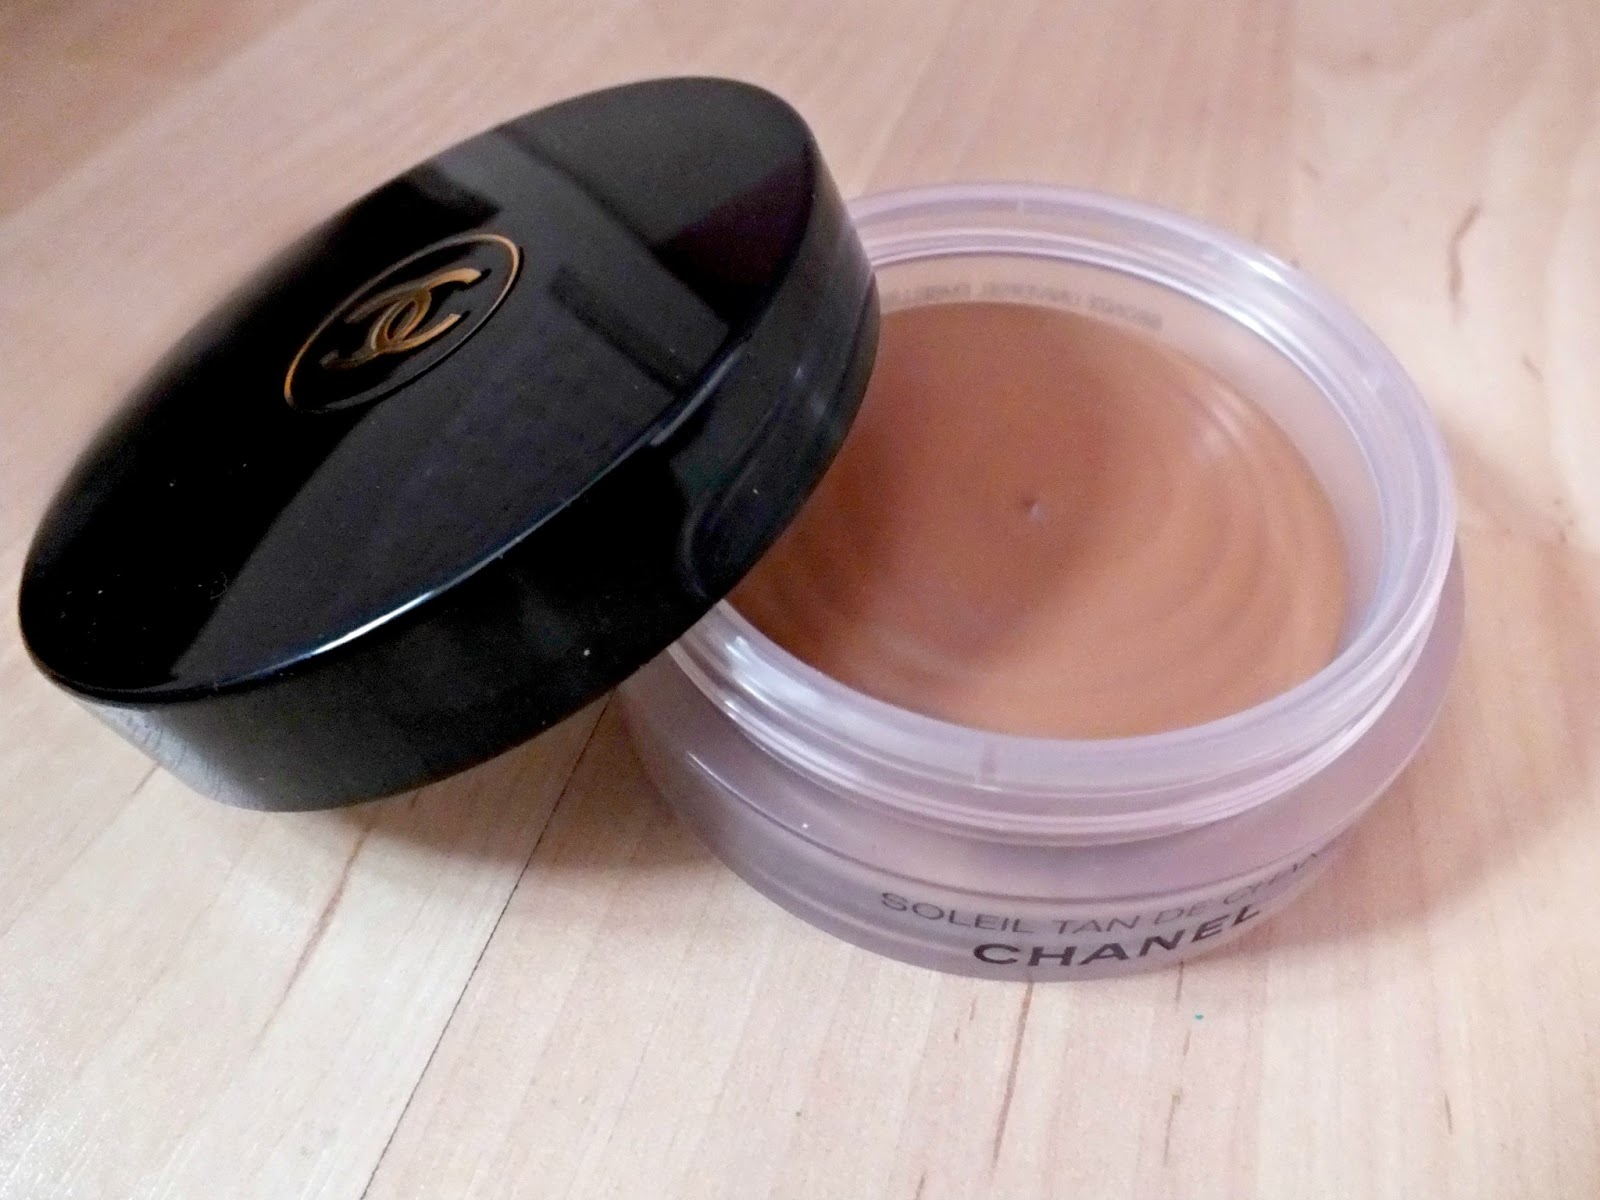 Chanel Bronzing Cream Review  Tan Deep on Medium Brown Skin 